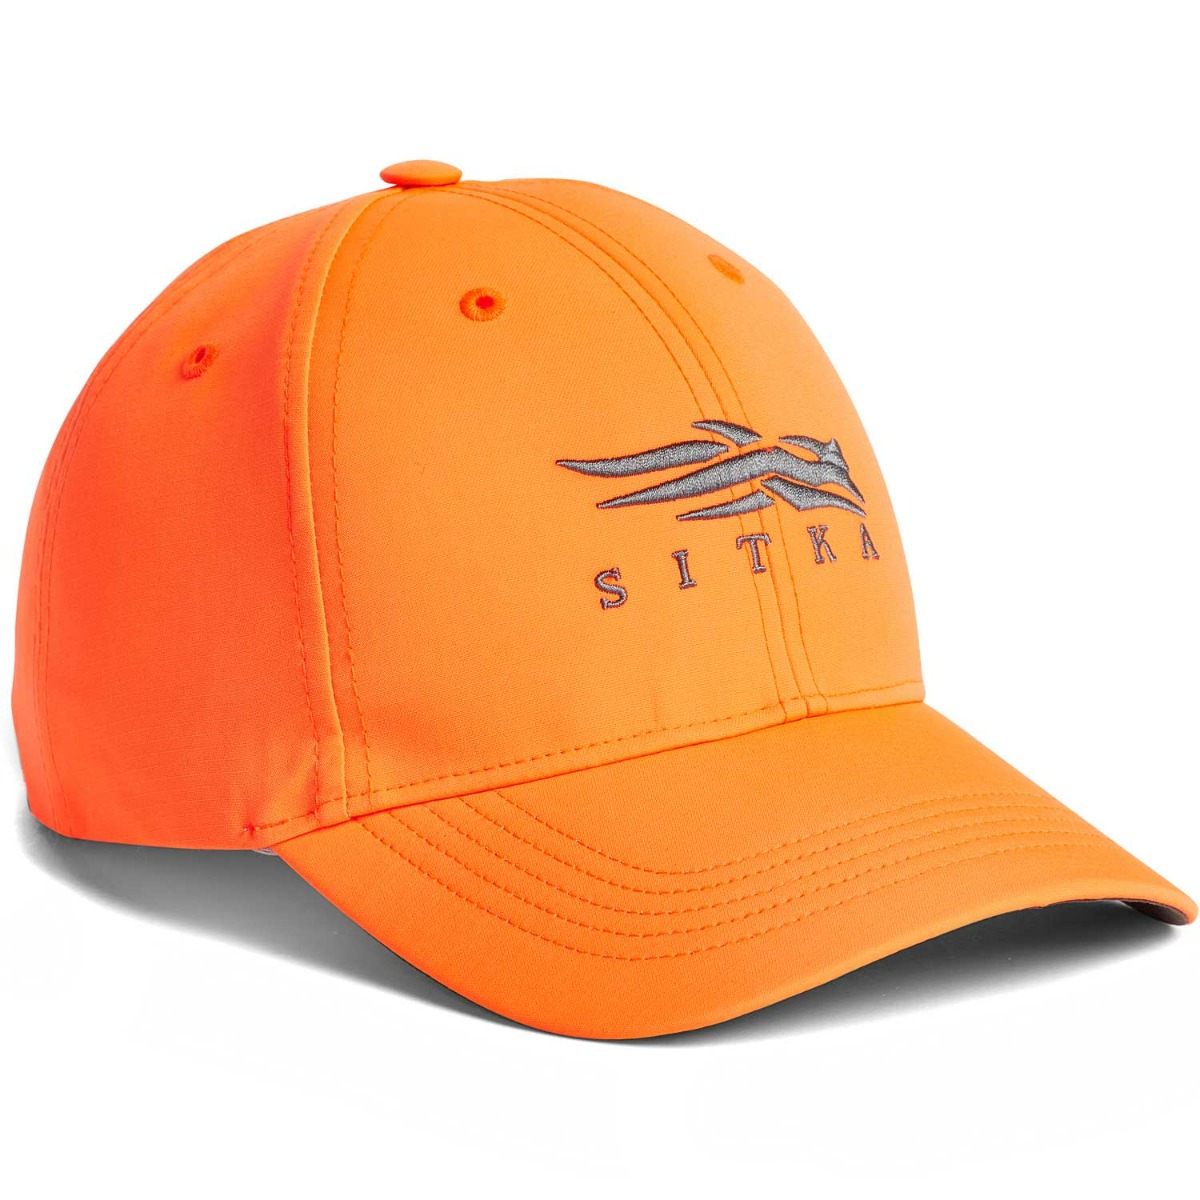 Sitka Ballistic Hat